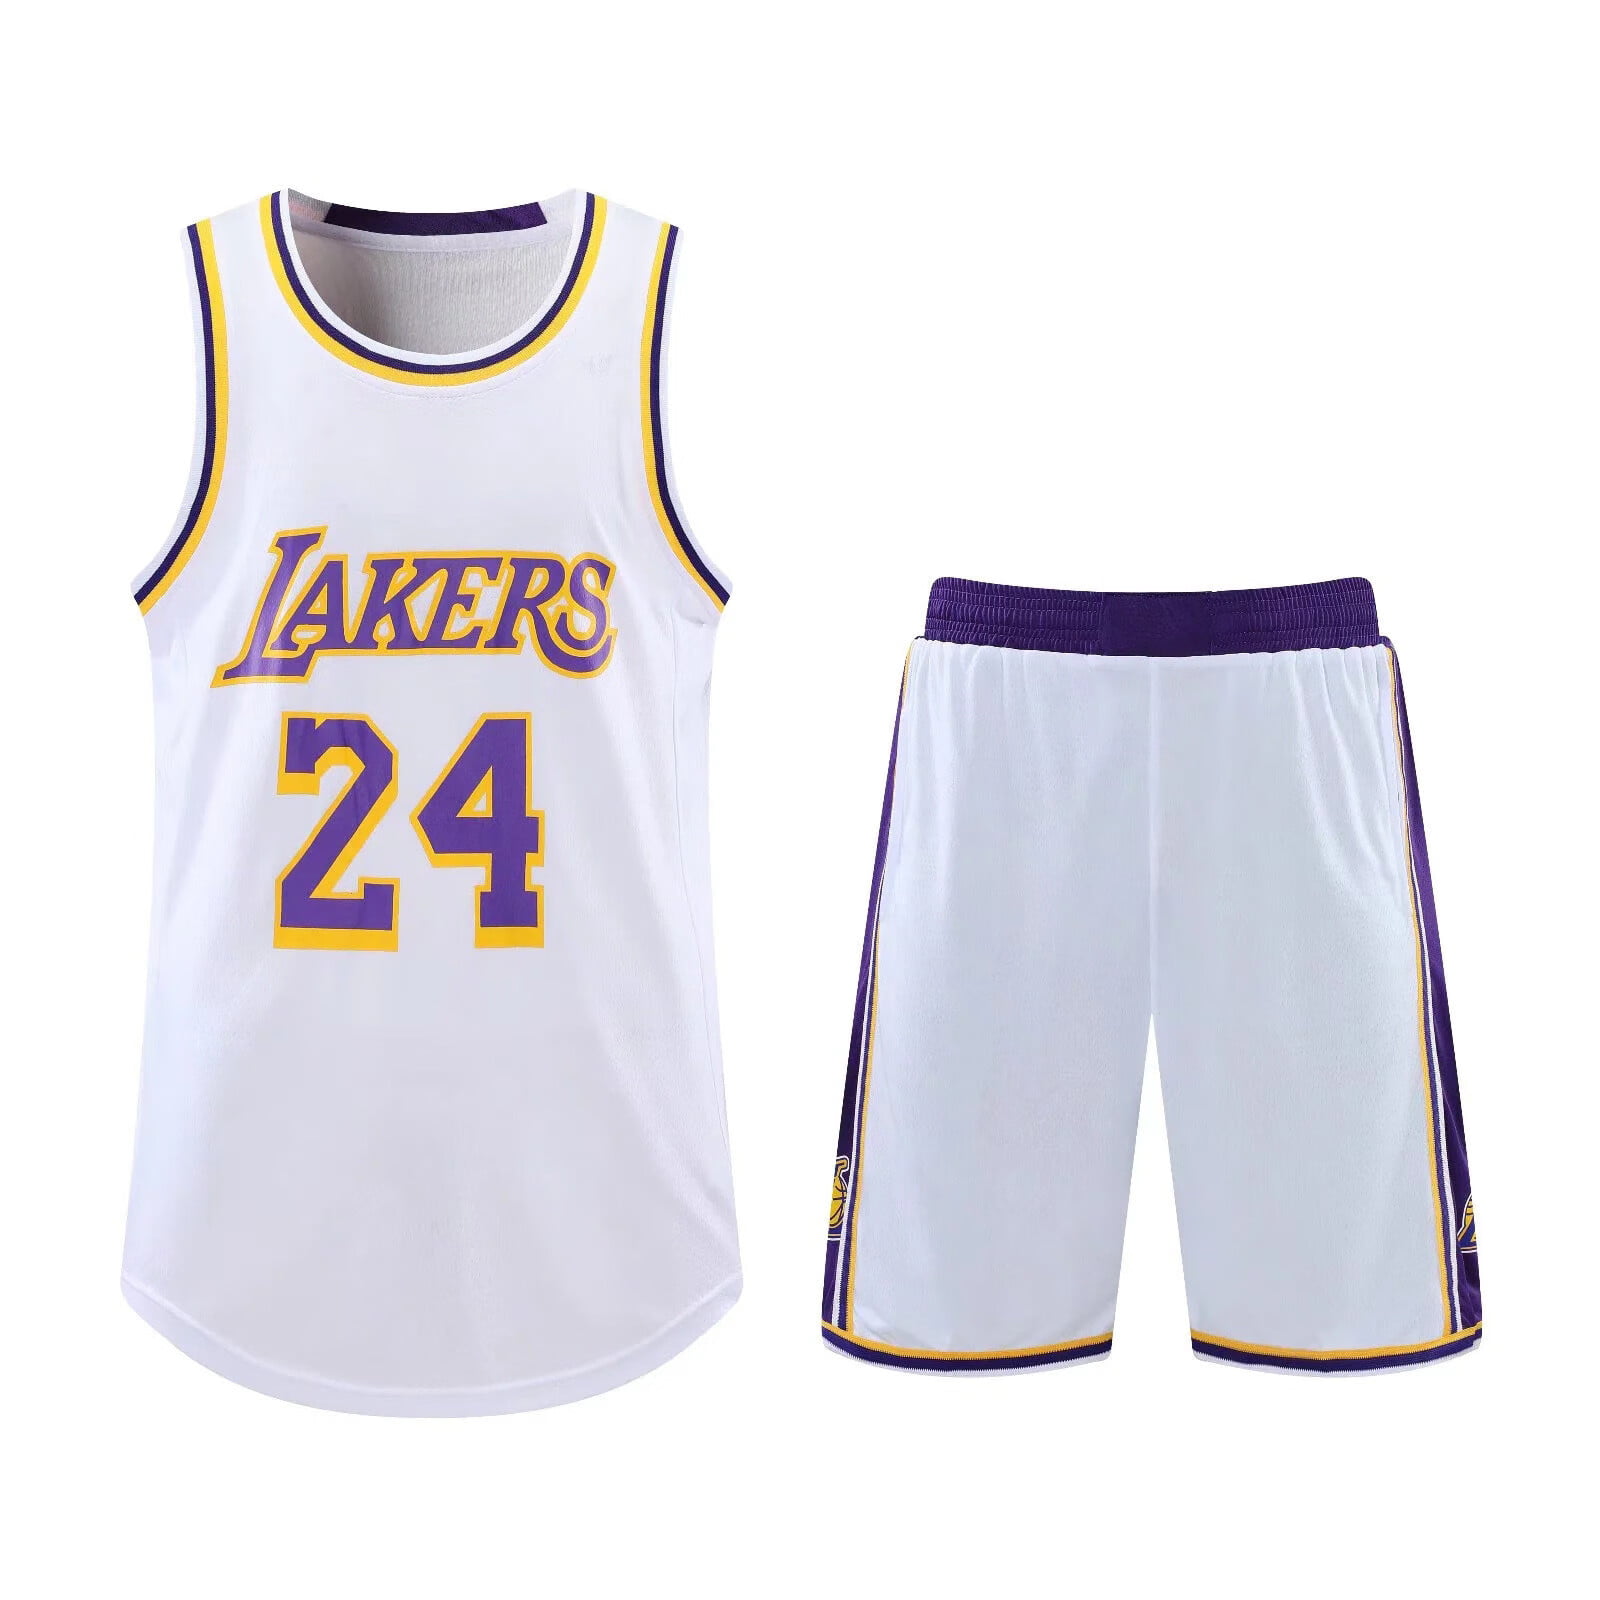 PUPPYY Miami 22#Butler Mens Basketball Uniform Basketball Uniform Retro Basketball Jerseys Breathable Sportswear L 